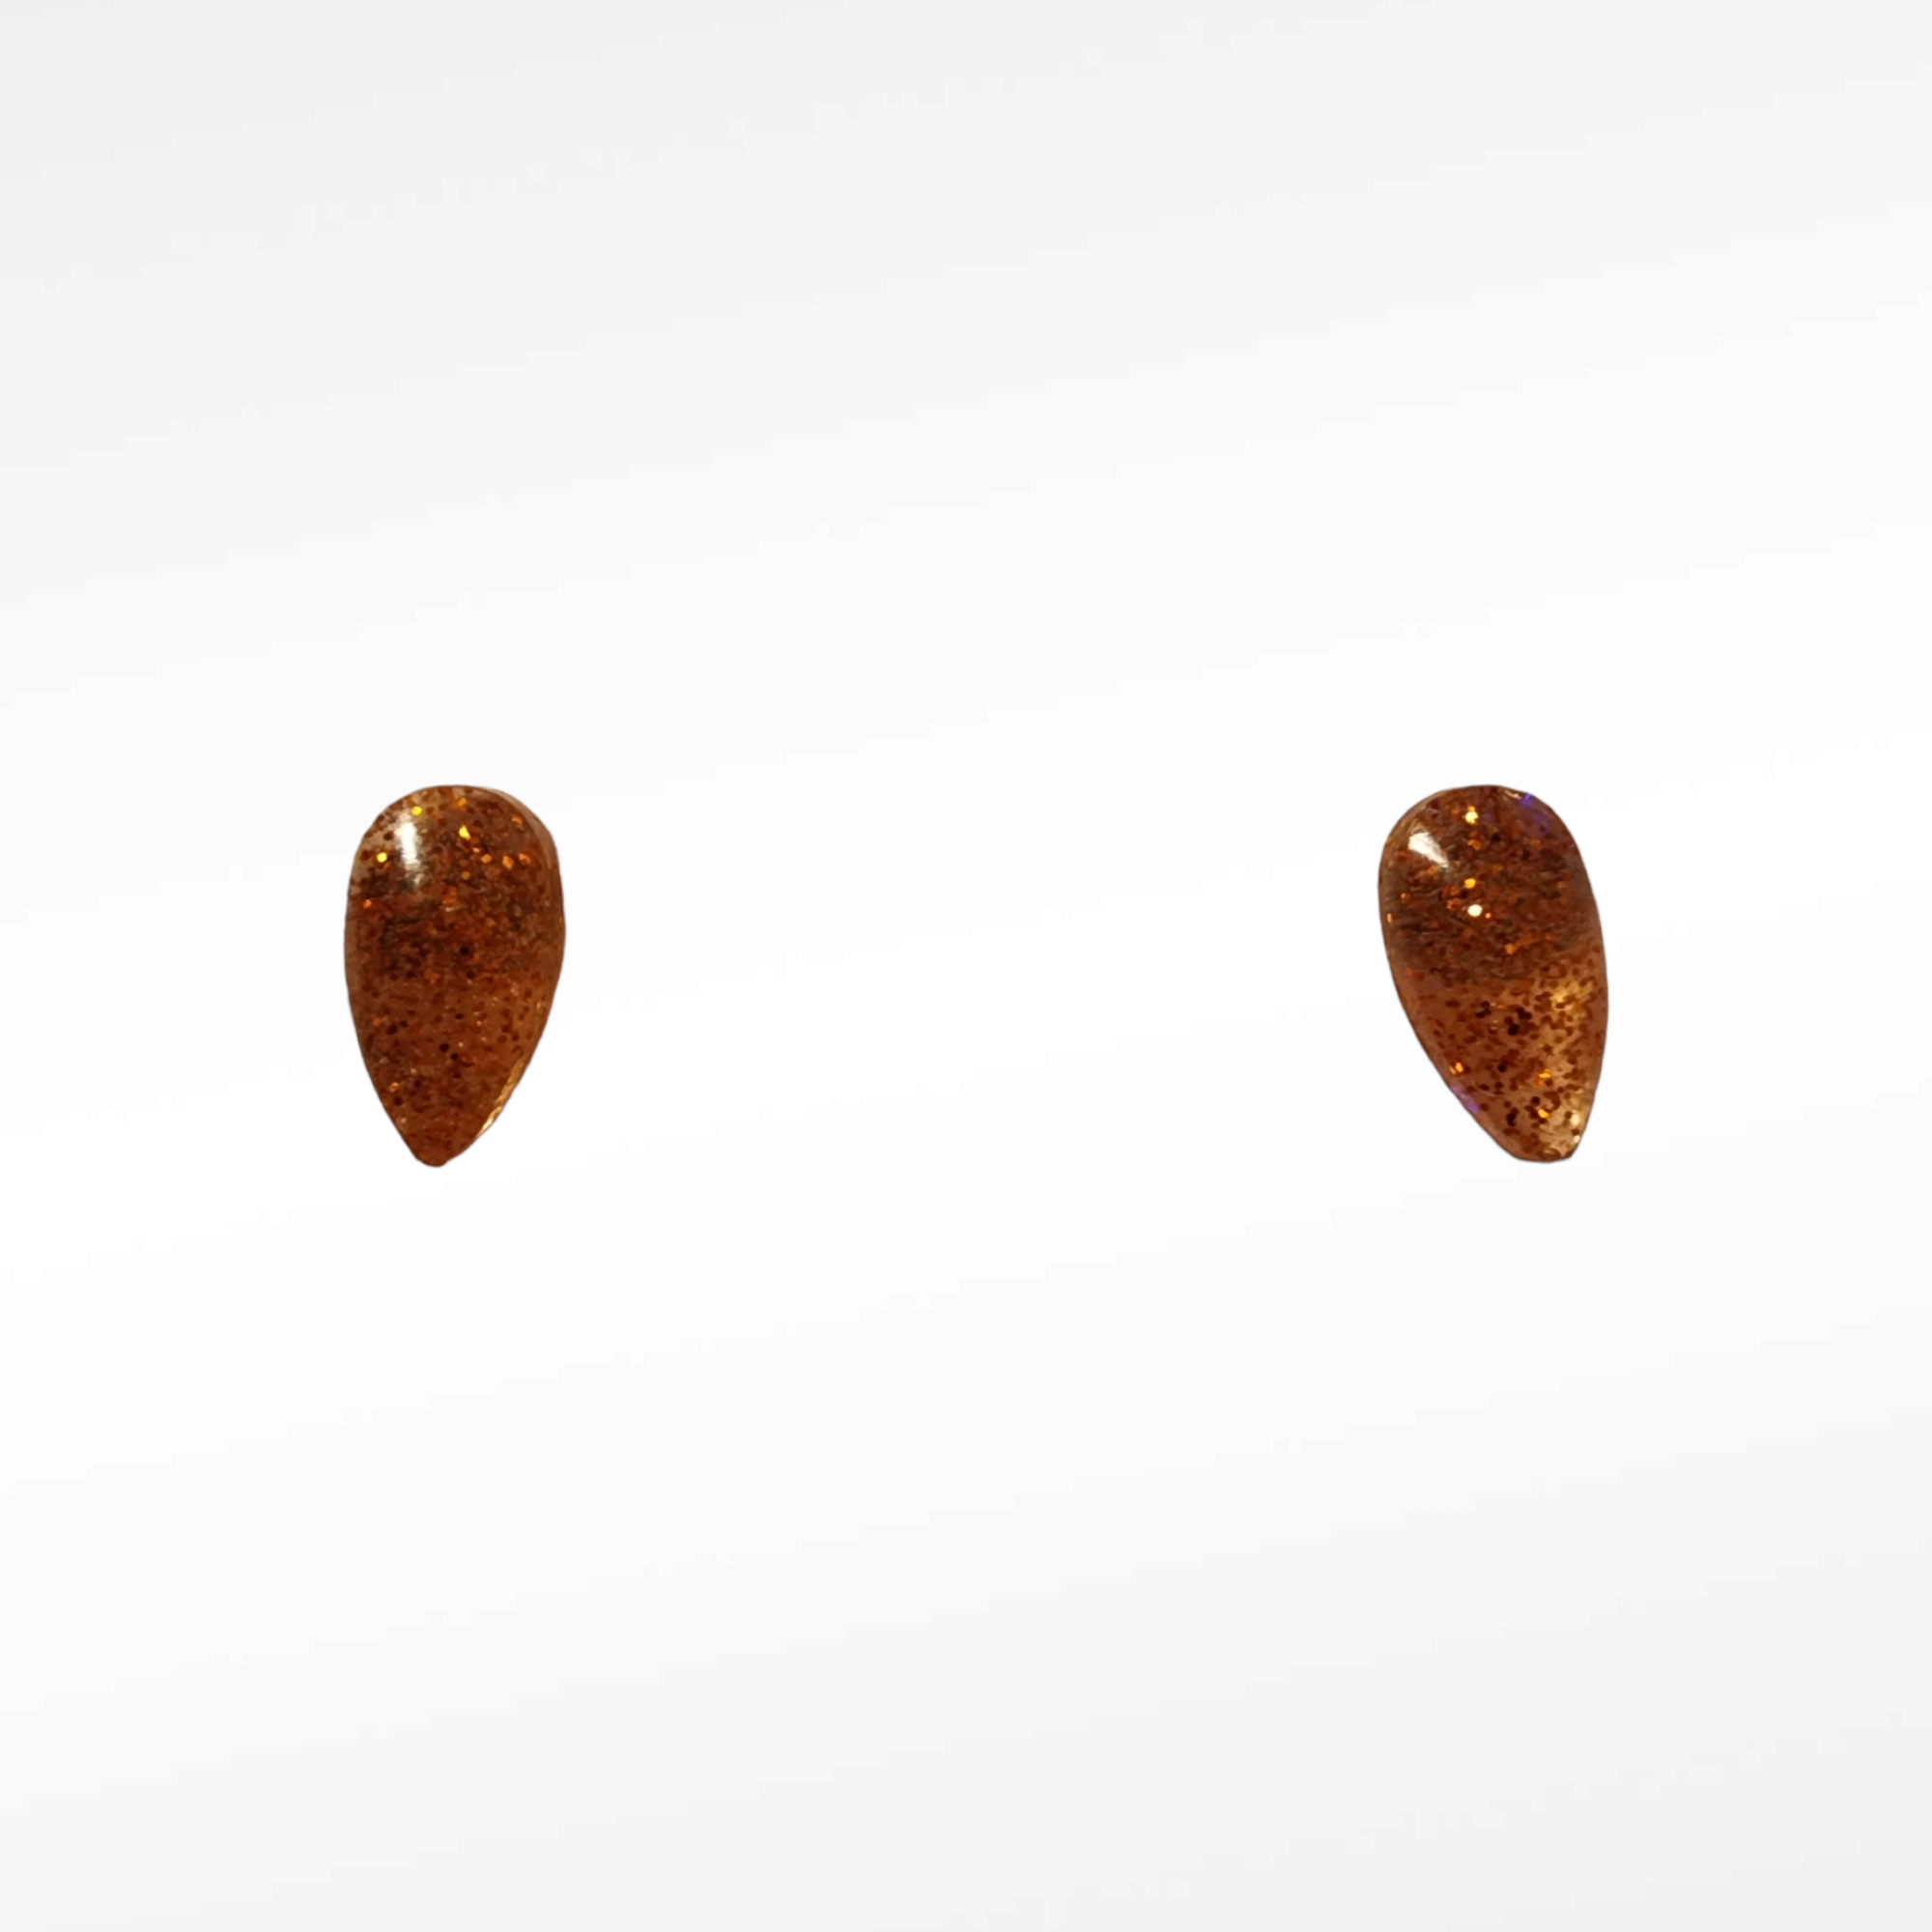 Unique shaped earrings